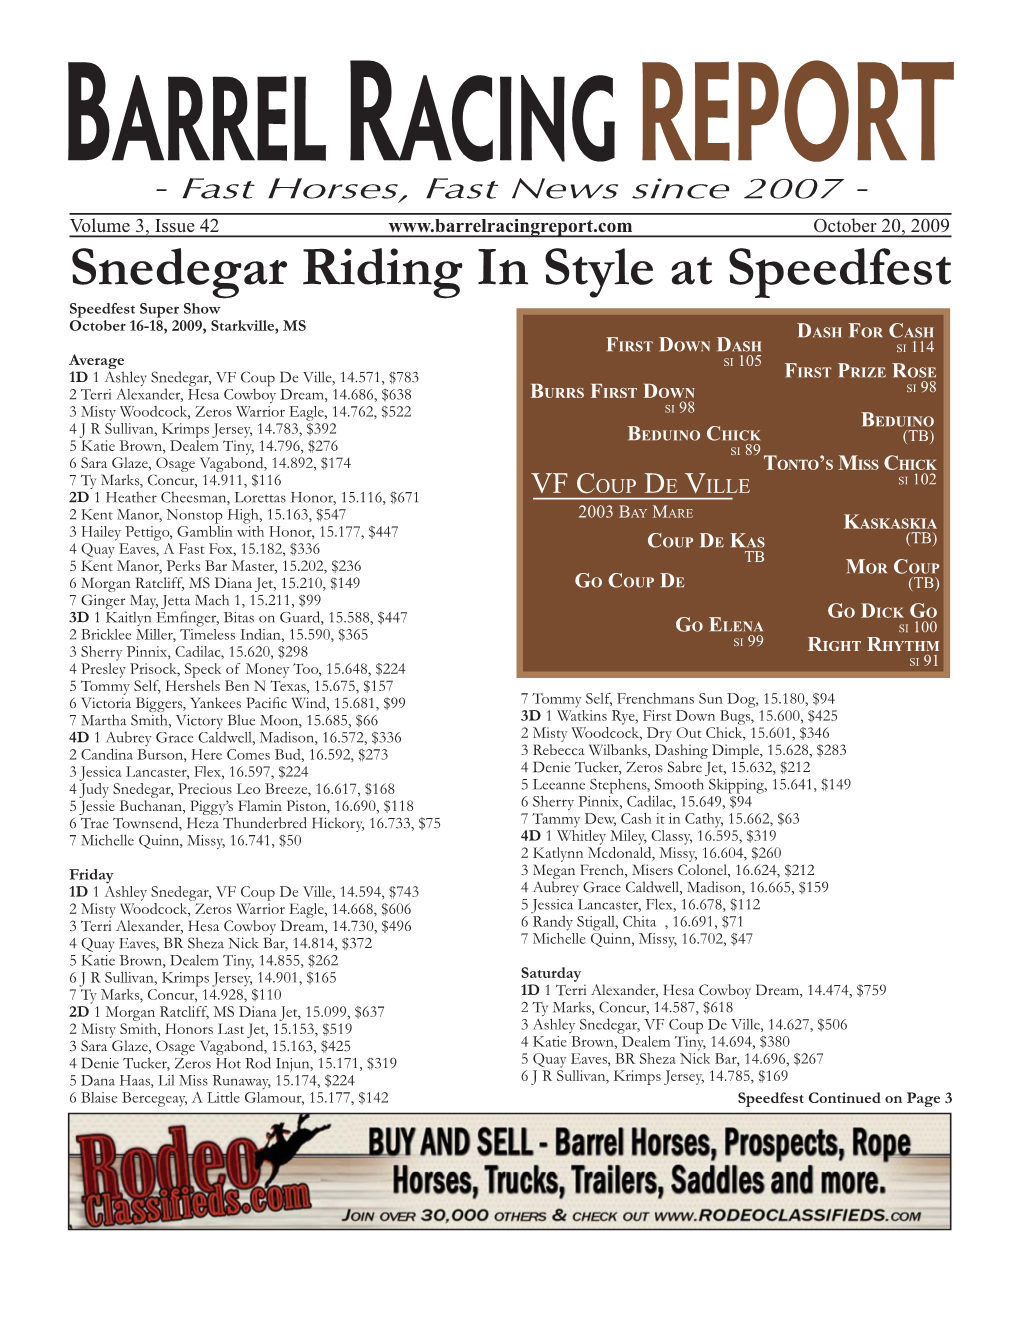 Snedegar Riding in Style at Speedfest